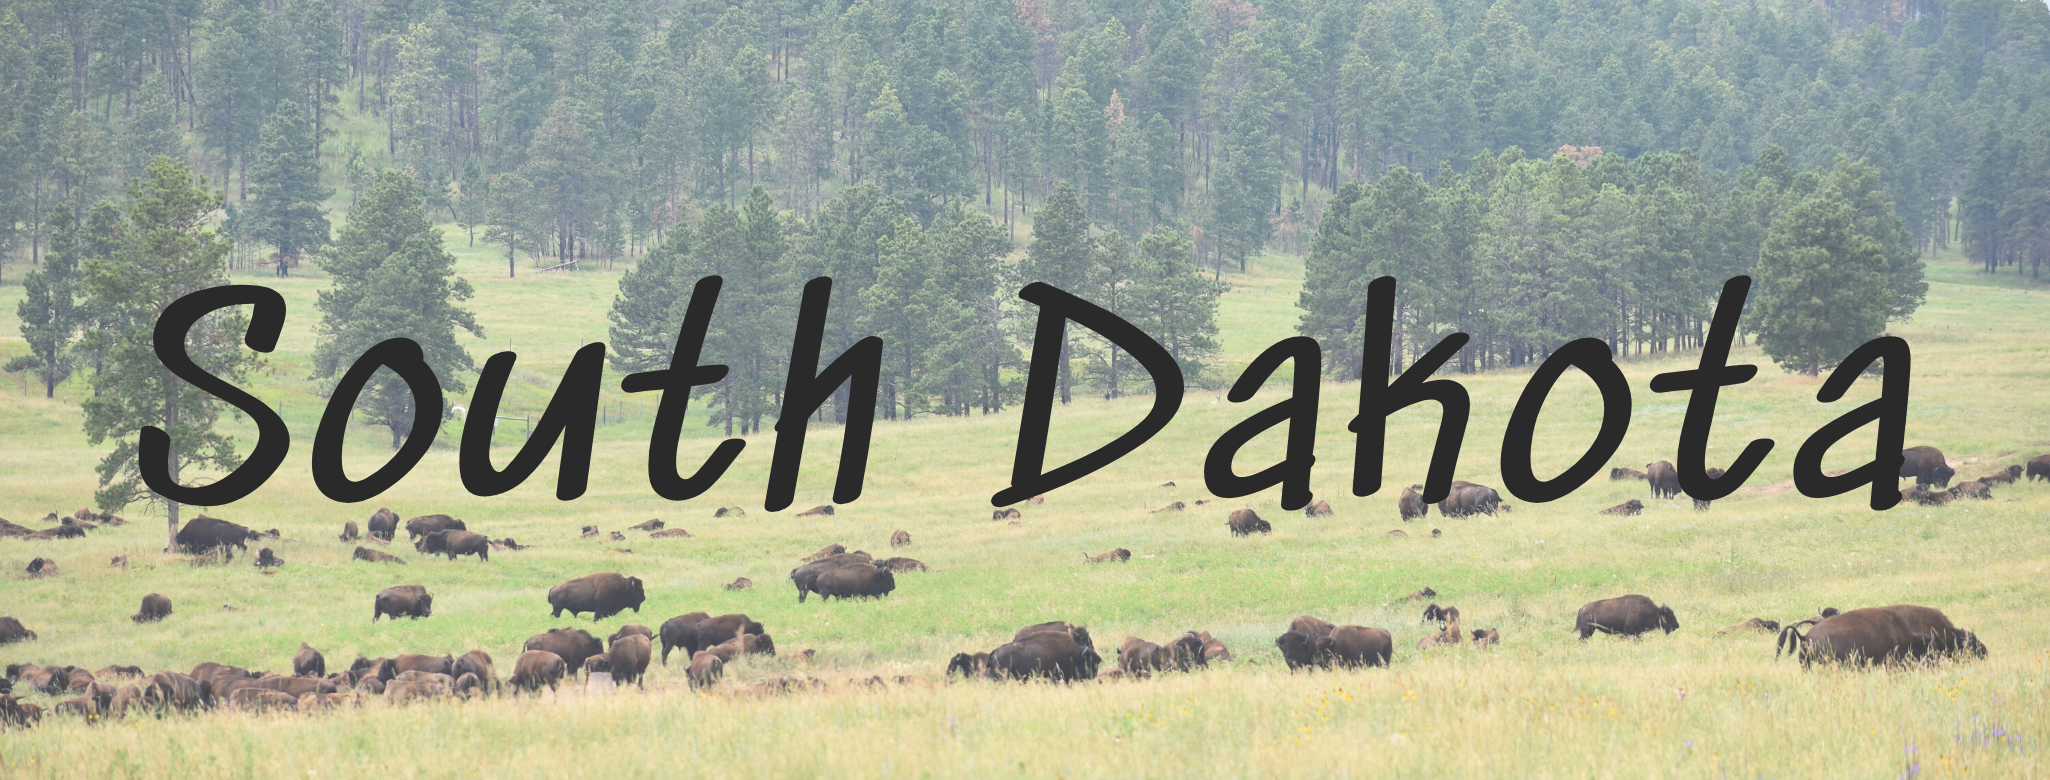 south dakota scenery with bison